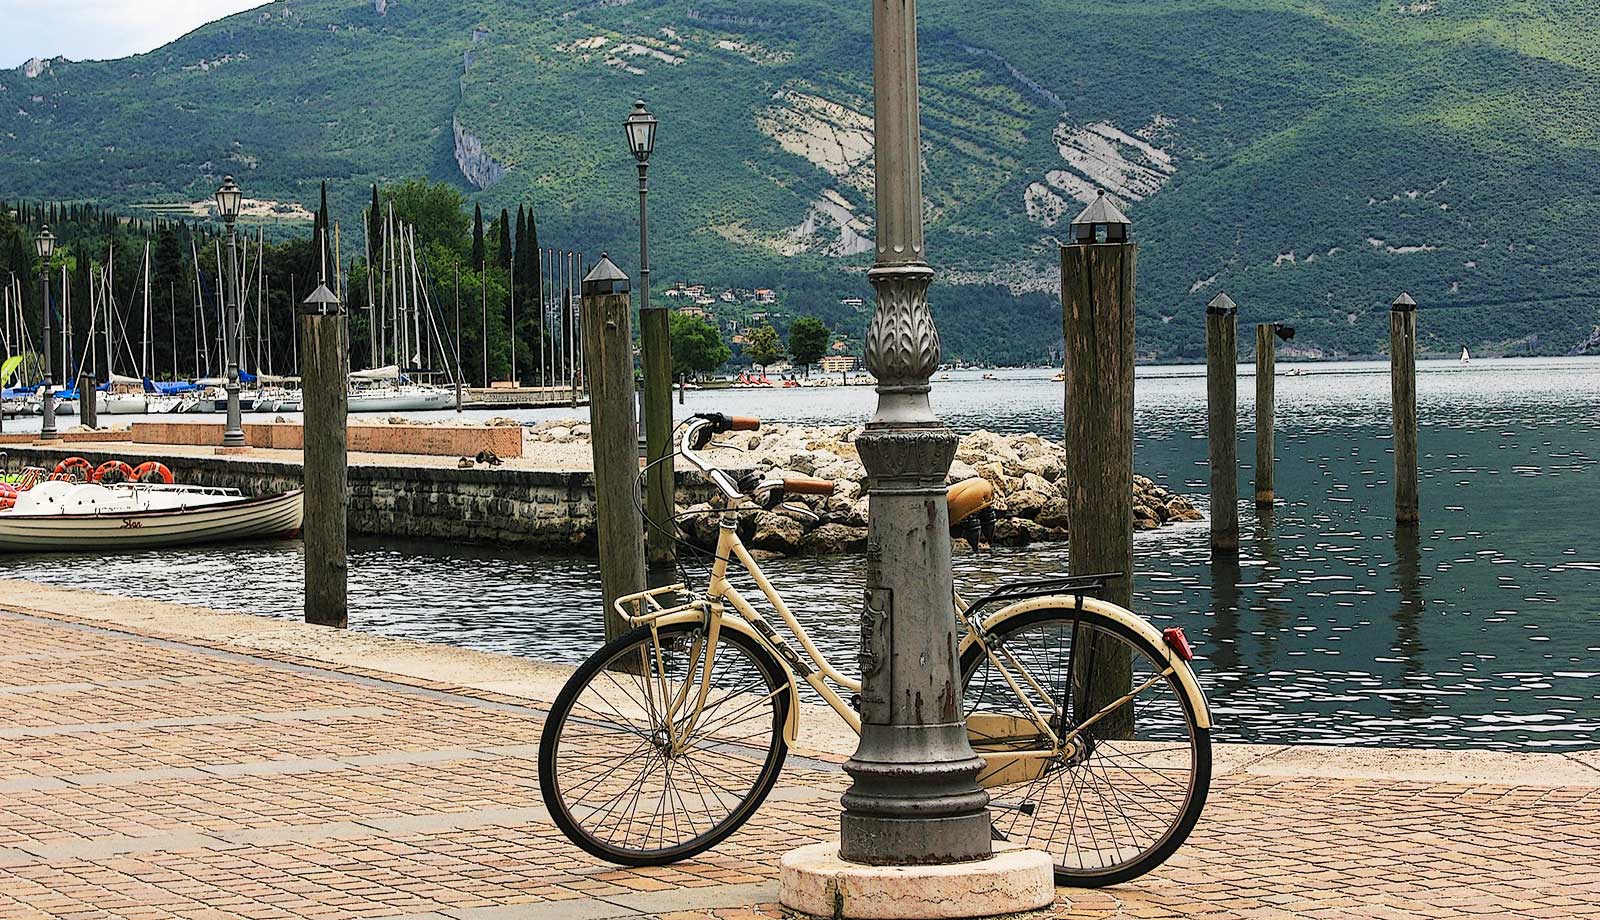 The Bike Festival returns to Riva del Garda